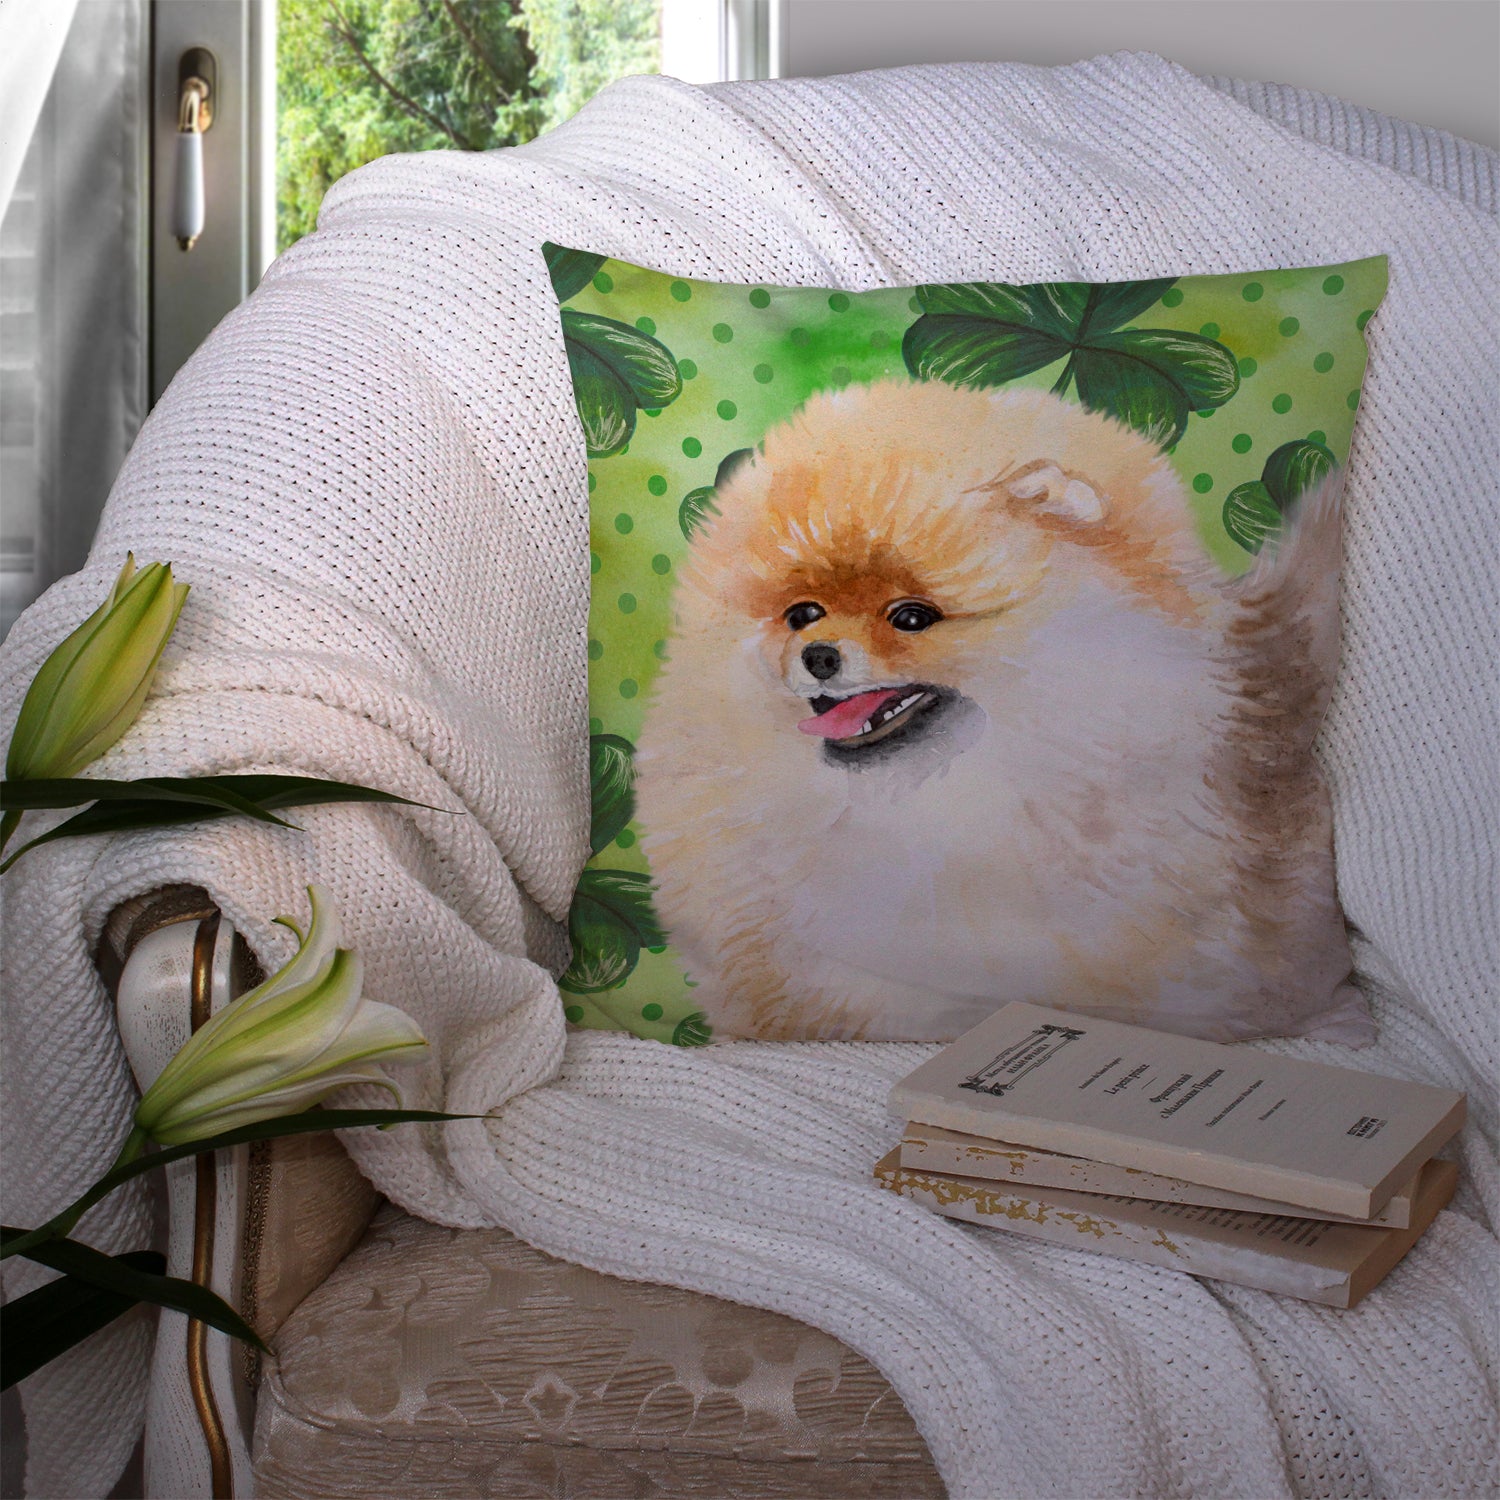 Pomeranian St Patrick's Fabric Decorative Pillow BB9856PW1414 - the-store.com